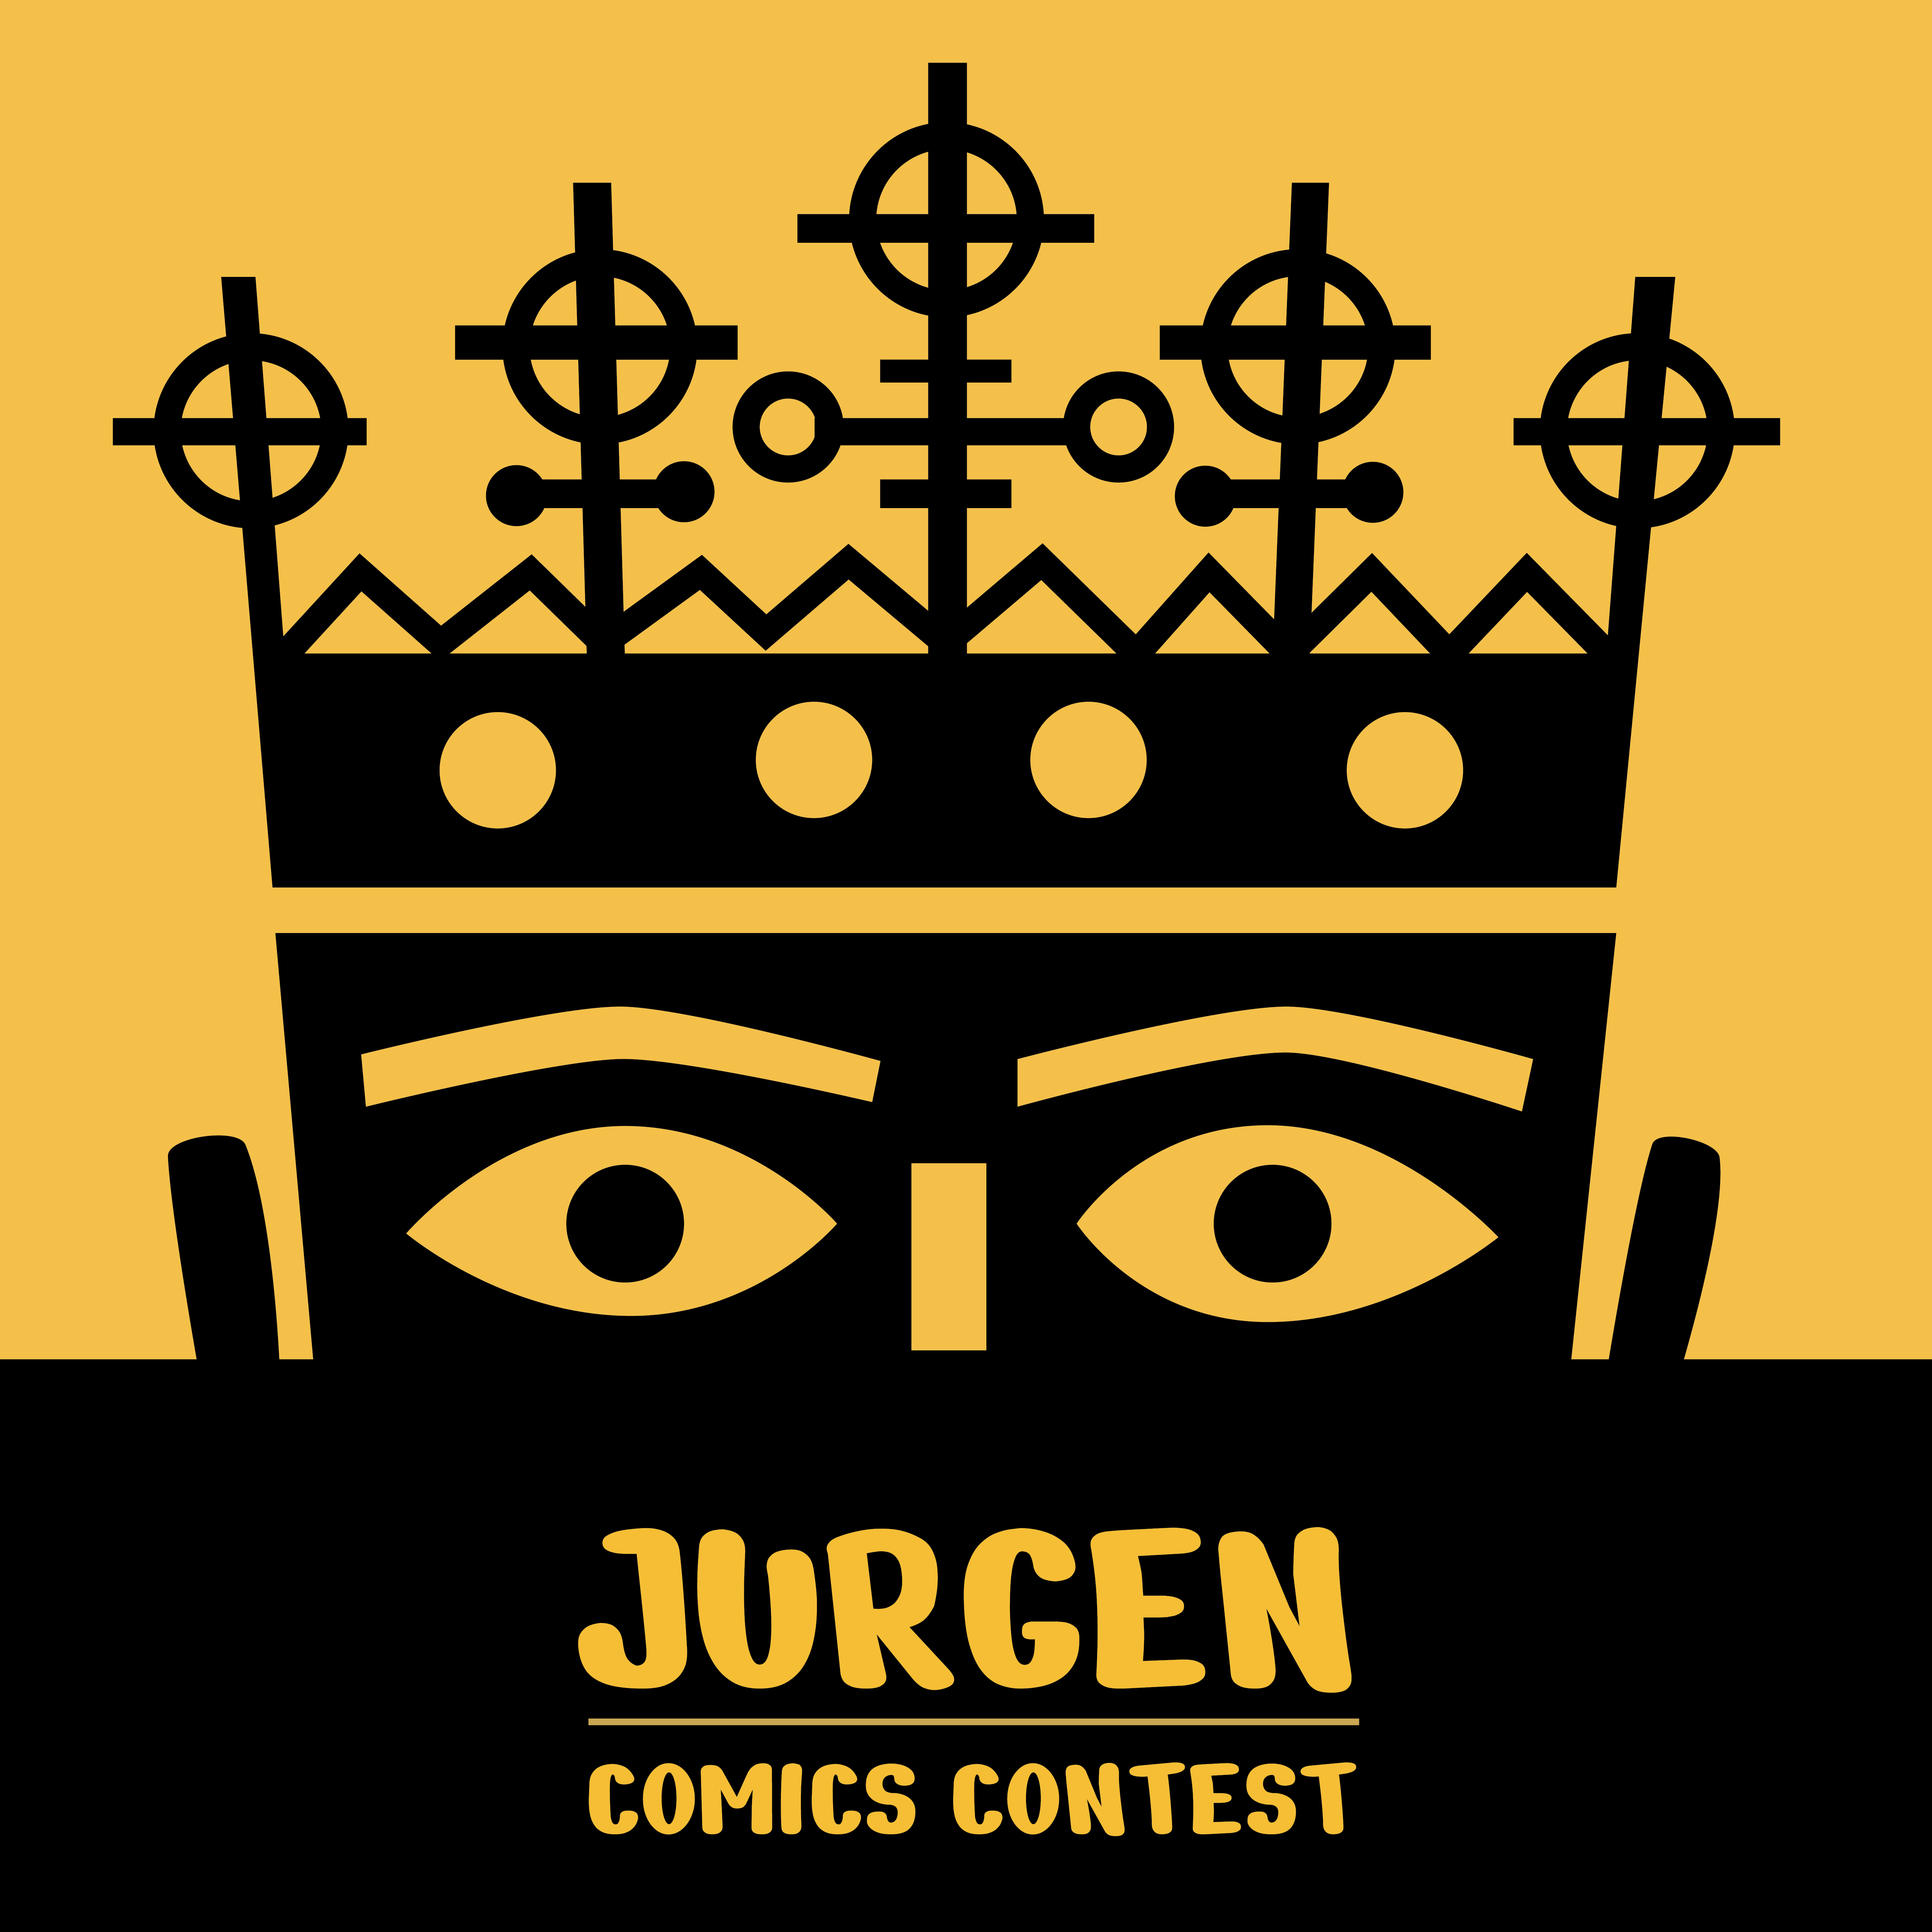 Jurgen Banned Art Comics Contest Info Session